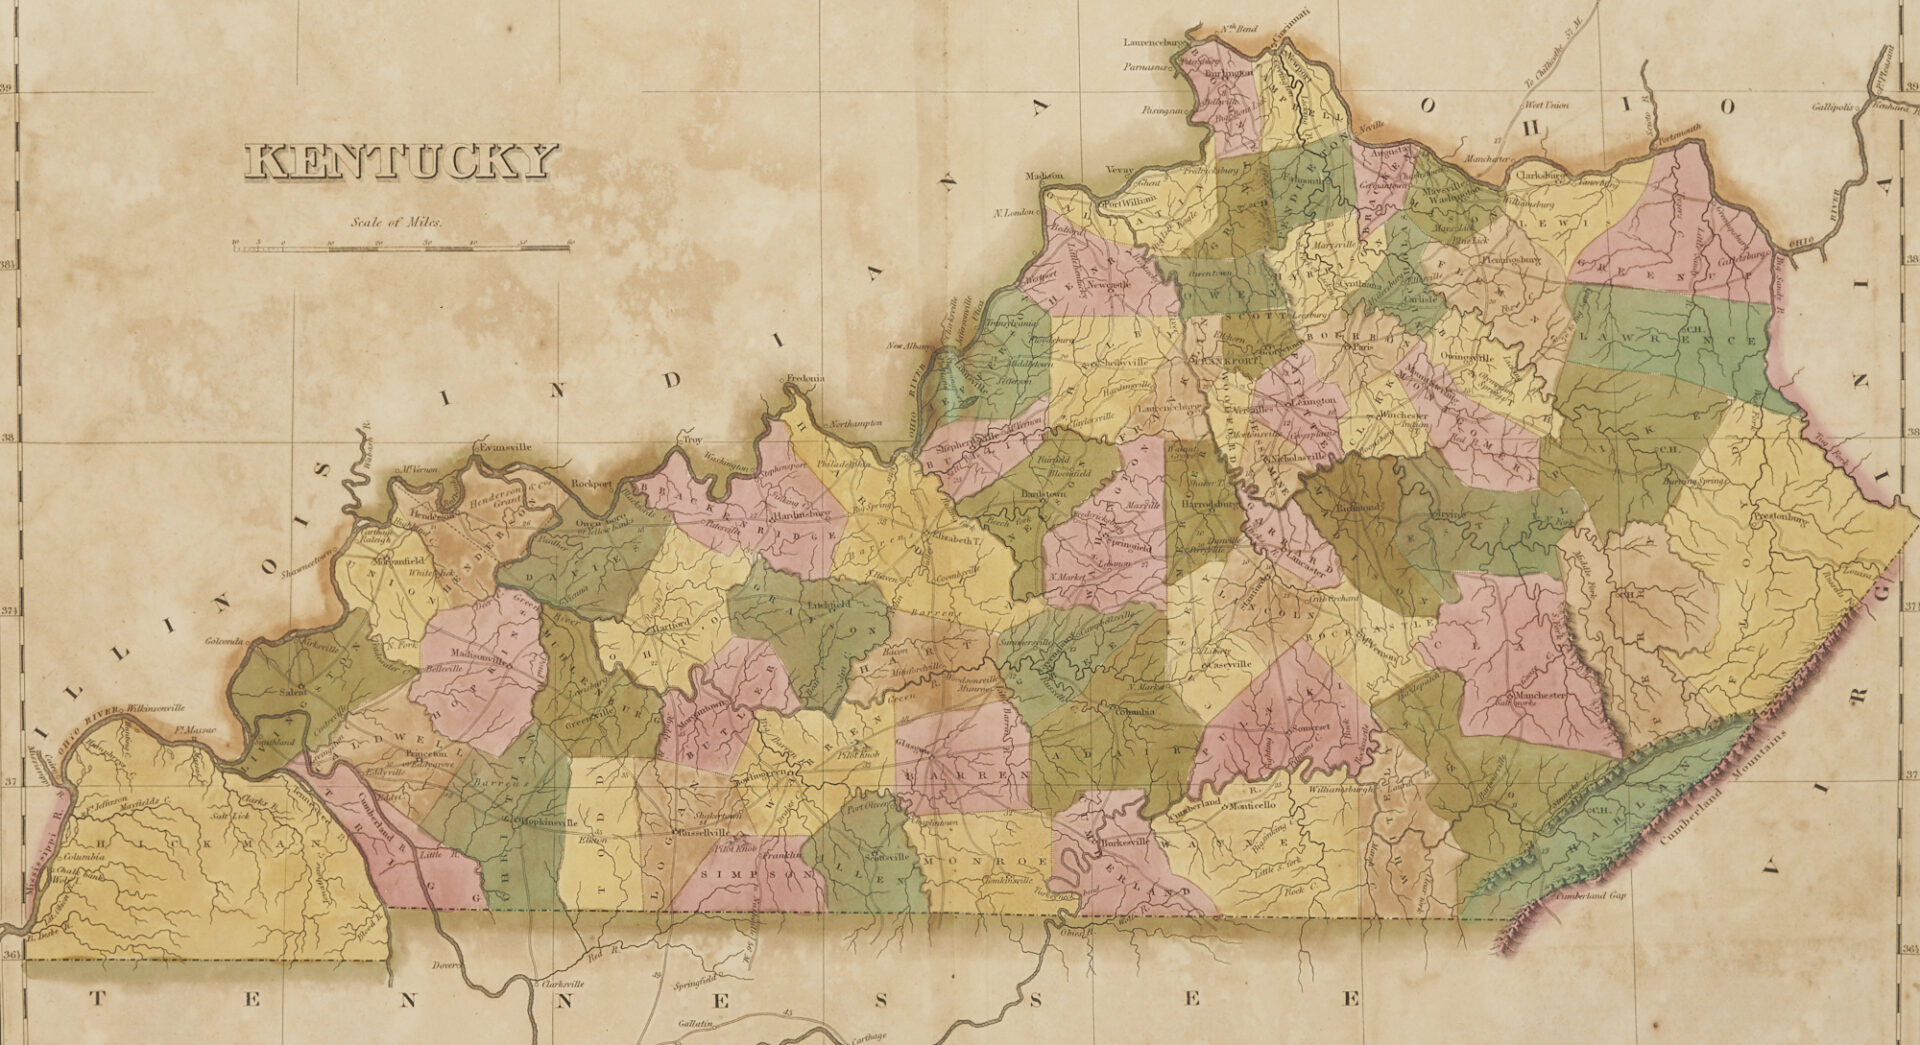 Lot 555: 2 Framed Historical Maps, North America & Kentucky, Carey & Lea